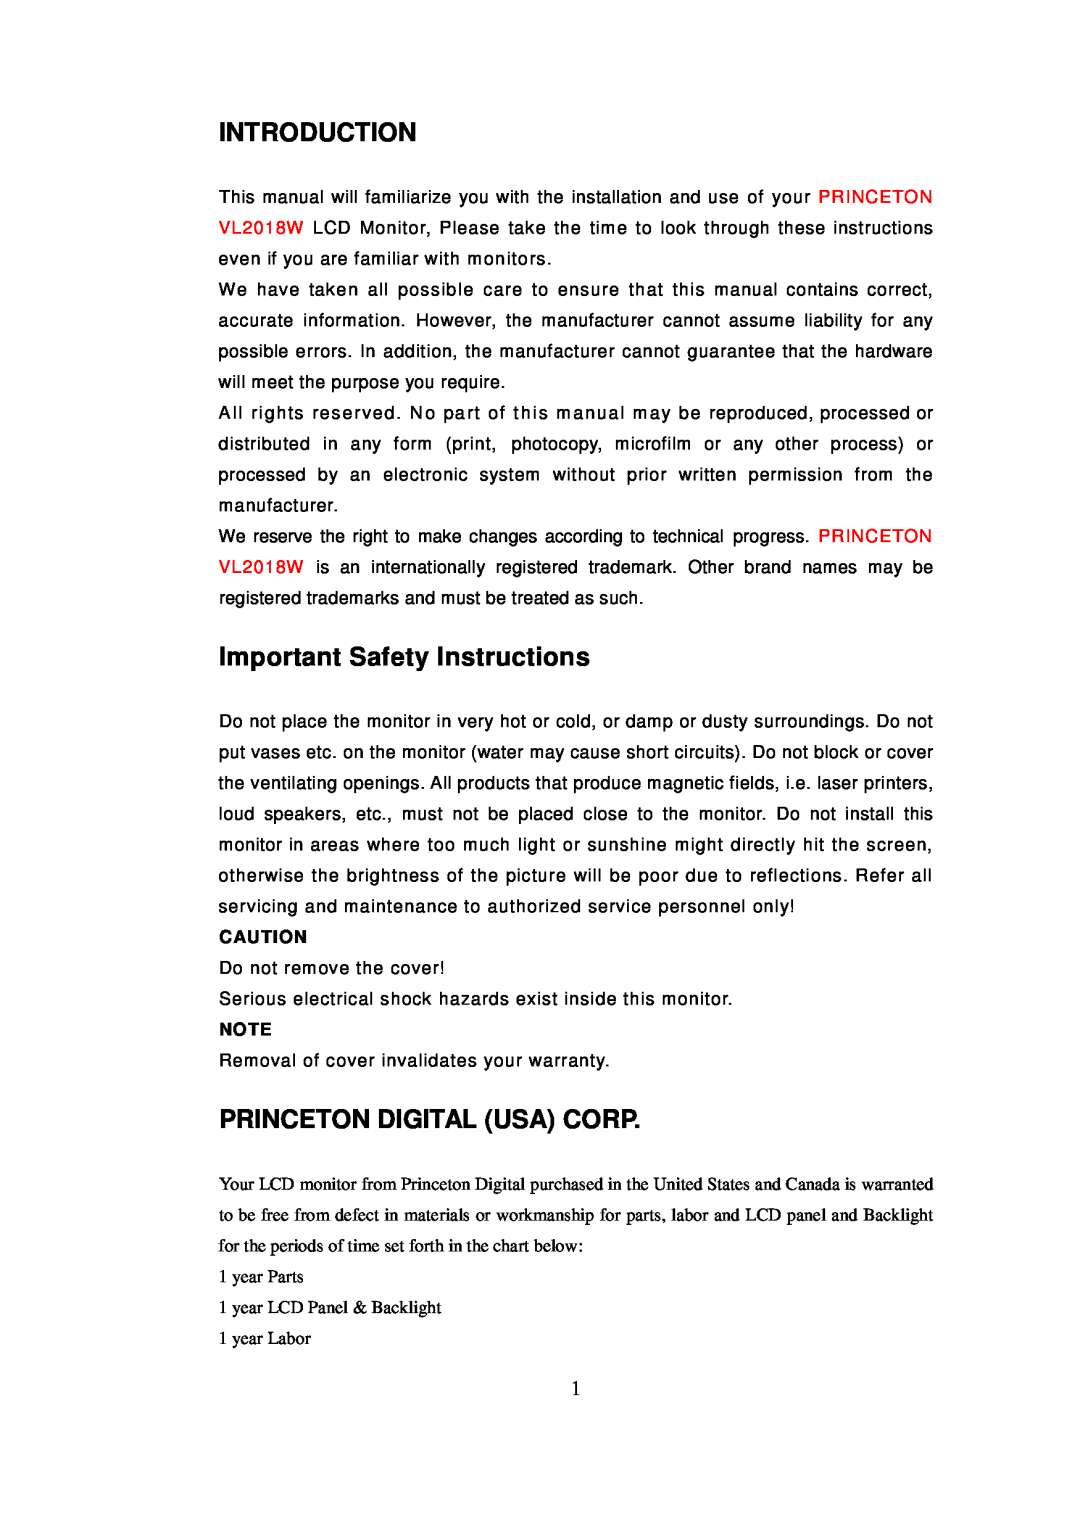 Princeton Digital (USA) VL2018W important safety instructions Introduction, Important Safety Instructions 